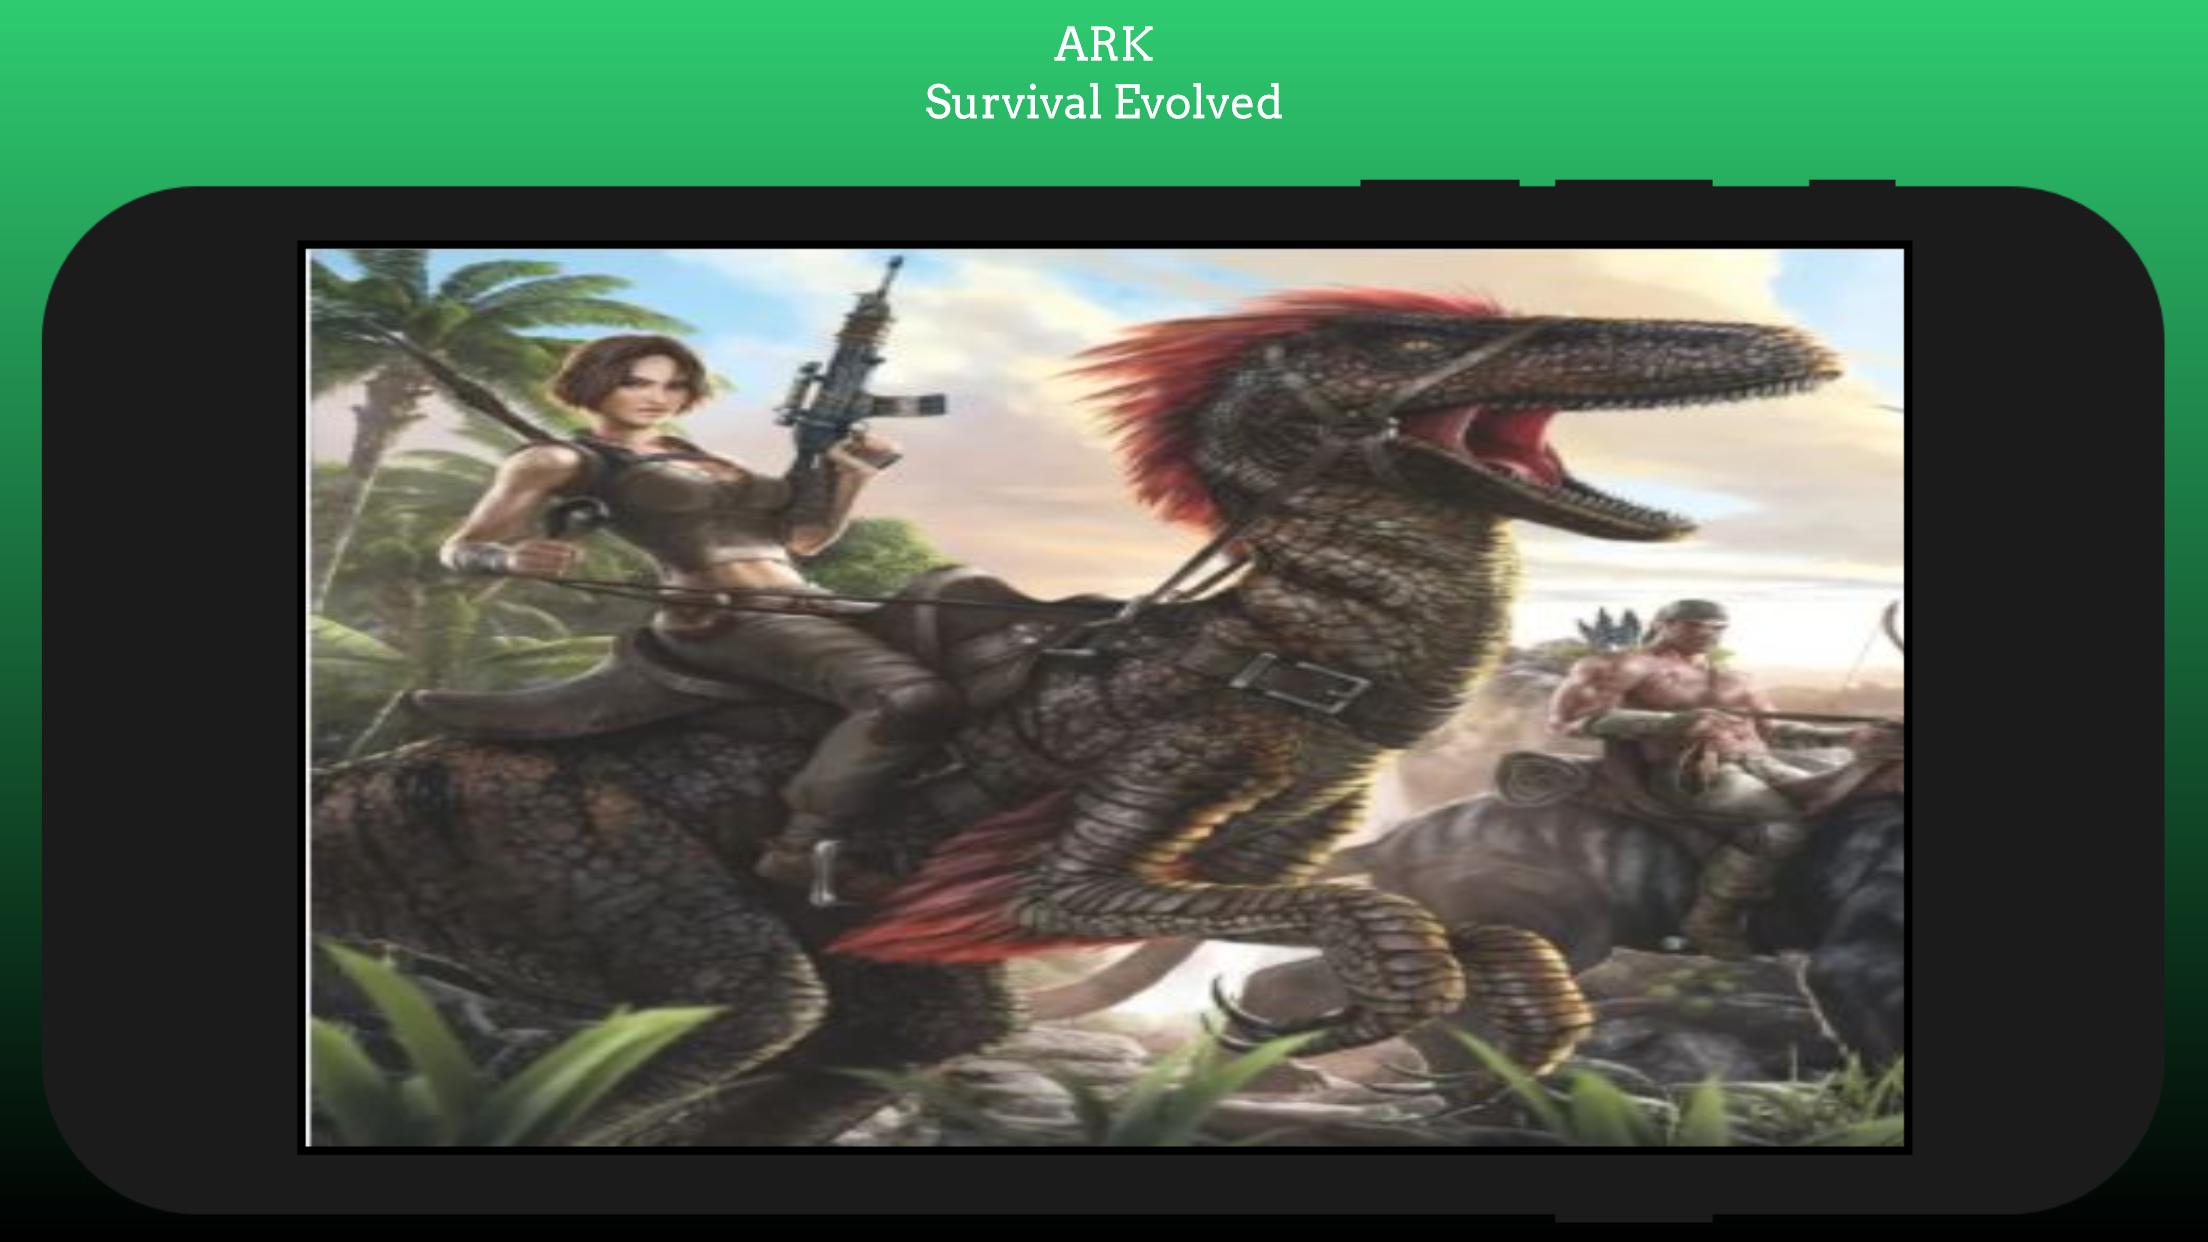 Телевизор арк файл. Ark: Survival Evolved. Картинки арка сурвавер и волд 2д. АРК файл. Ark Survival Evolved на телефон.